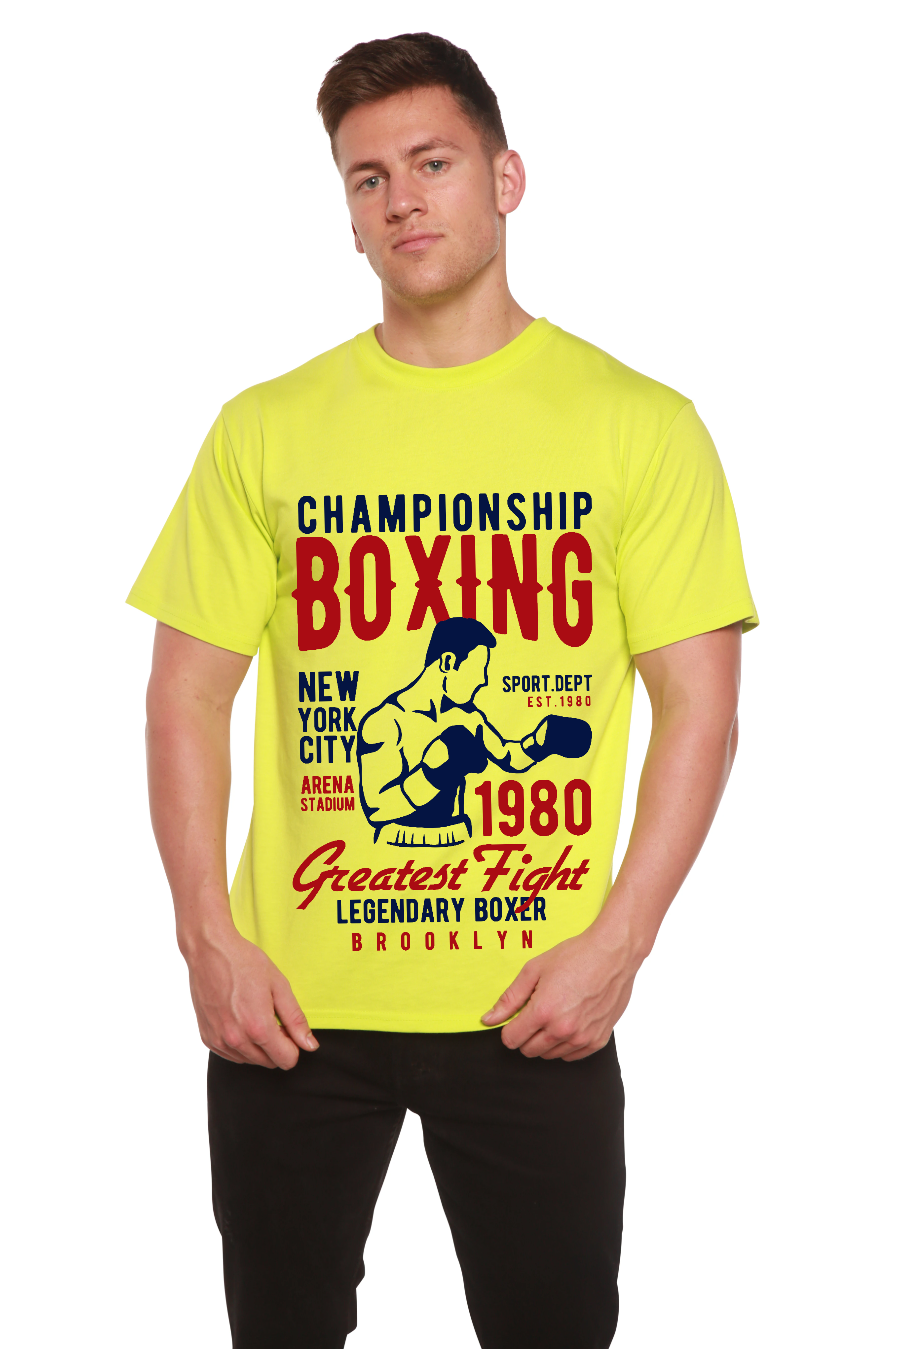 Championship Boxing Men's Bamboo Viscose/Organic Cotton Short Sleeve T-Shirt - Spun Bamboo